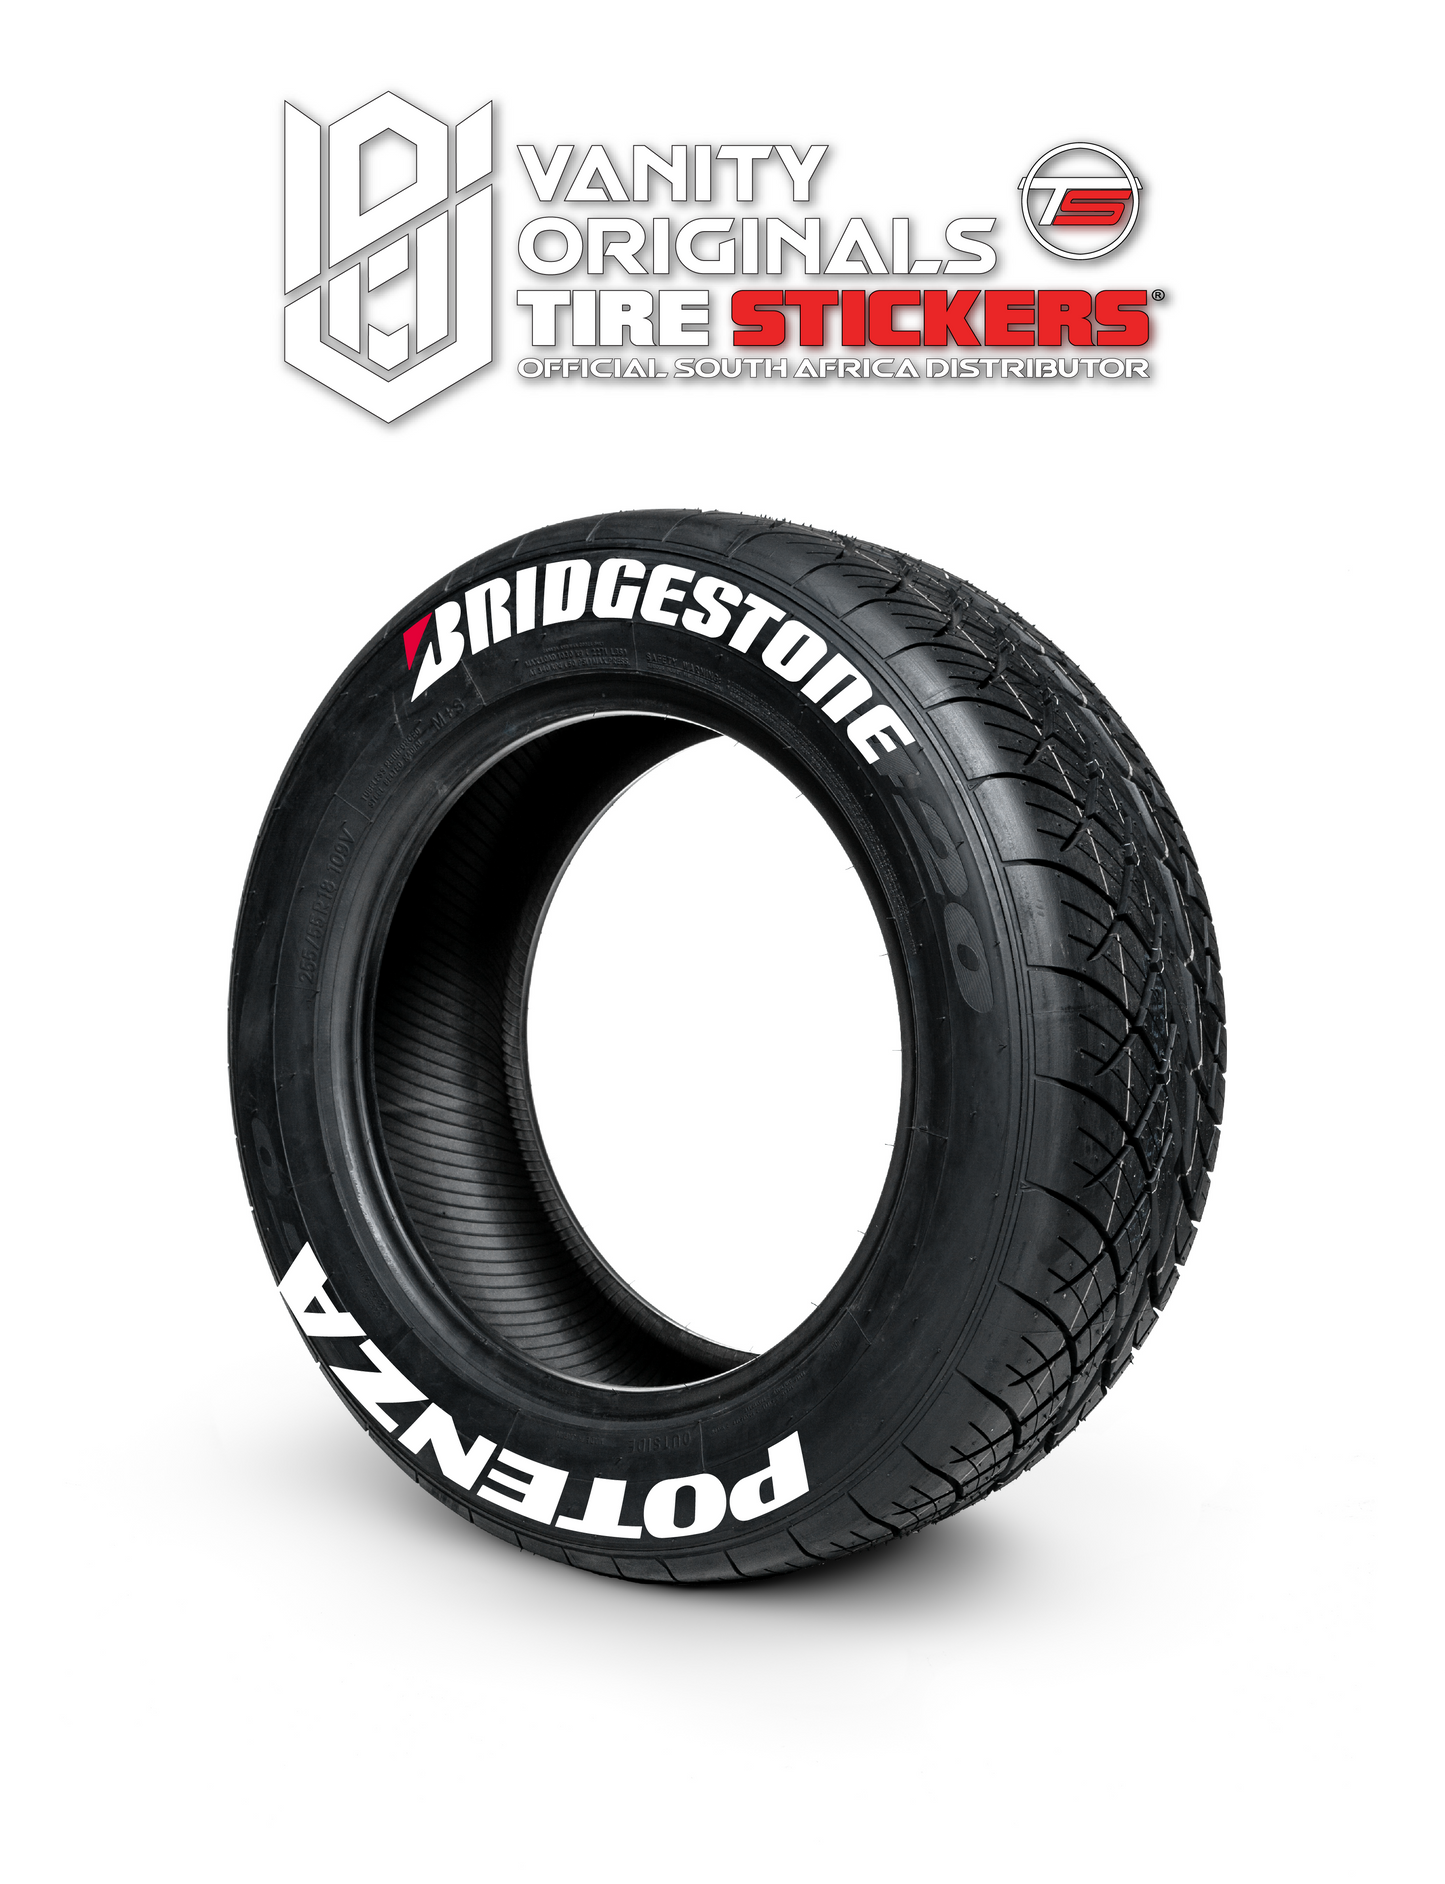 Bridgestone Potenza ( 8x Rubber Decals, Adhesive & Instructions Included )